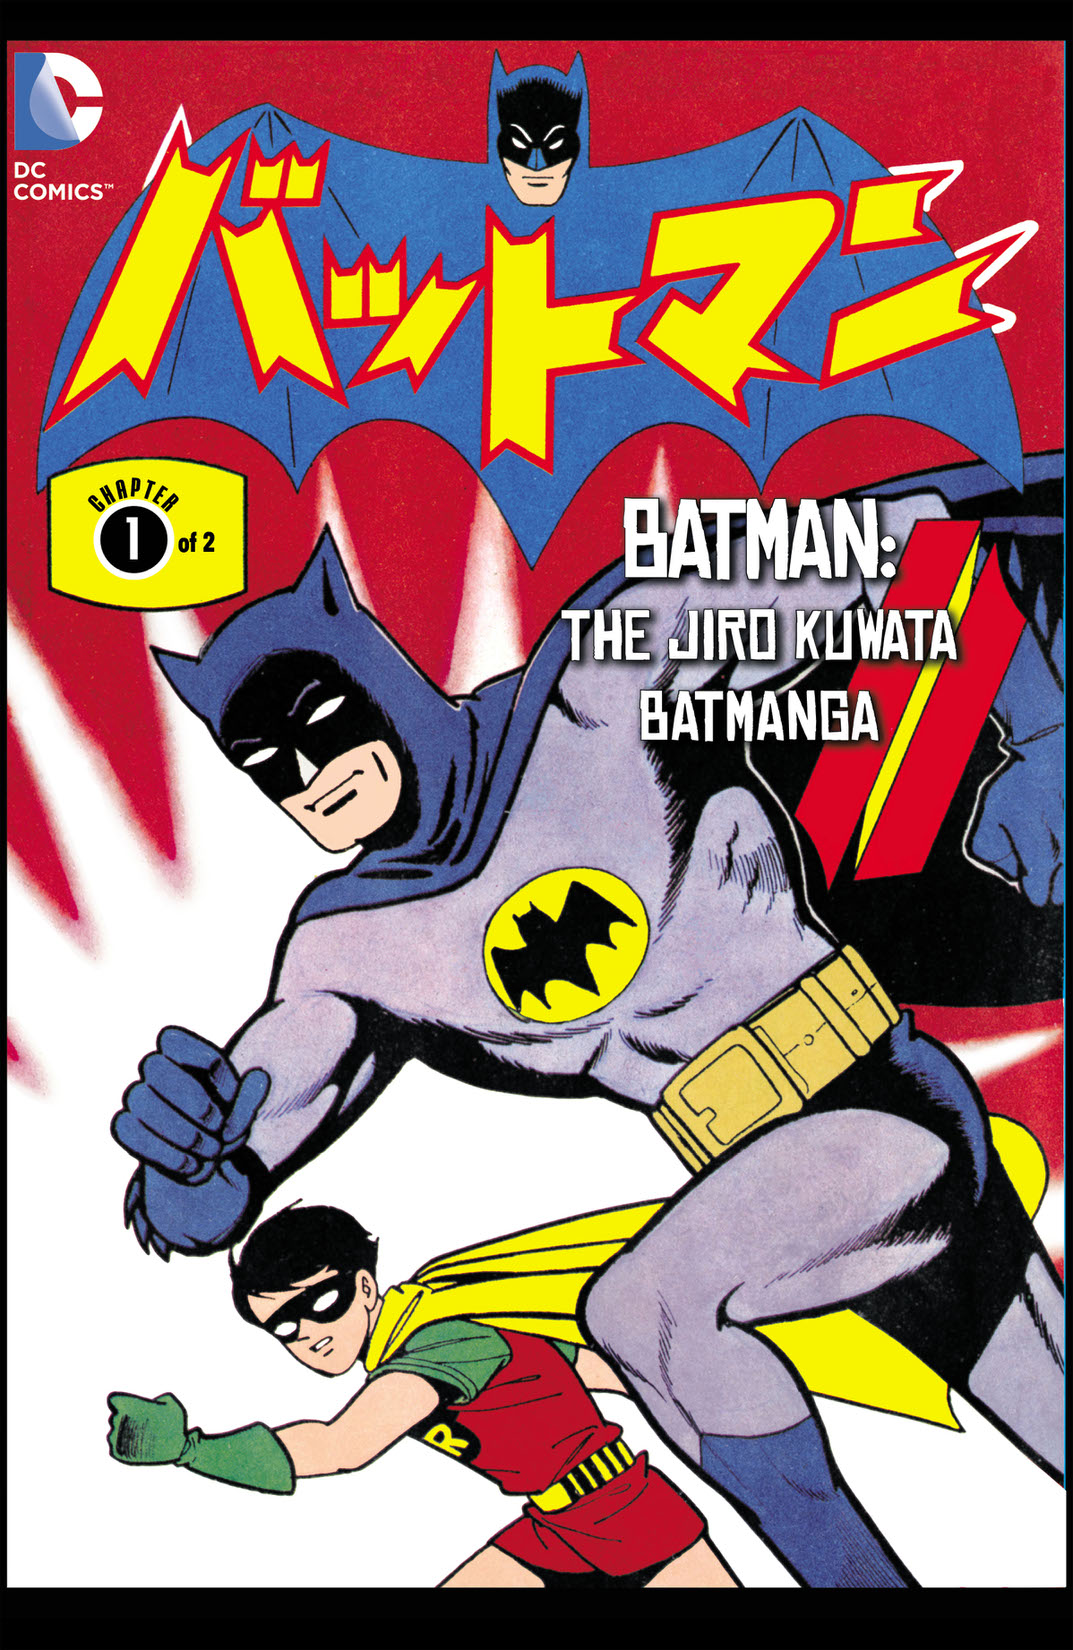 Batman: The Jiro Kuwata Batmanga #44 preview images